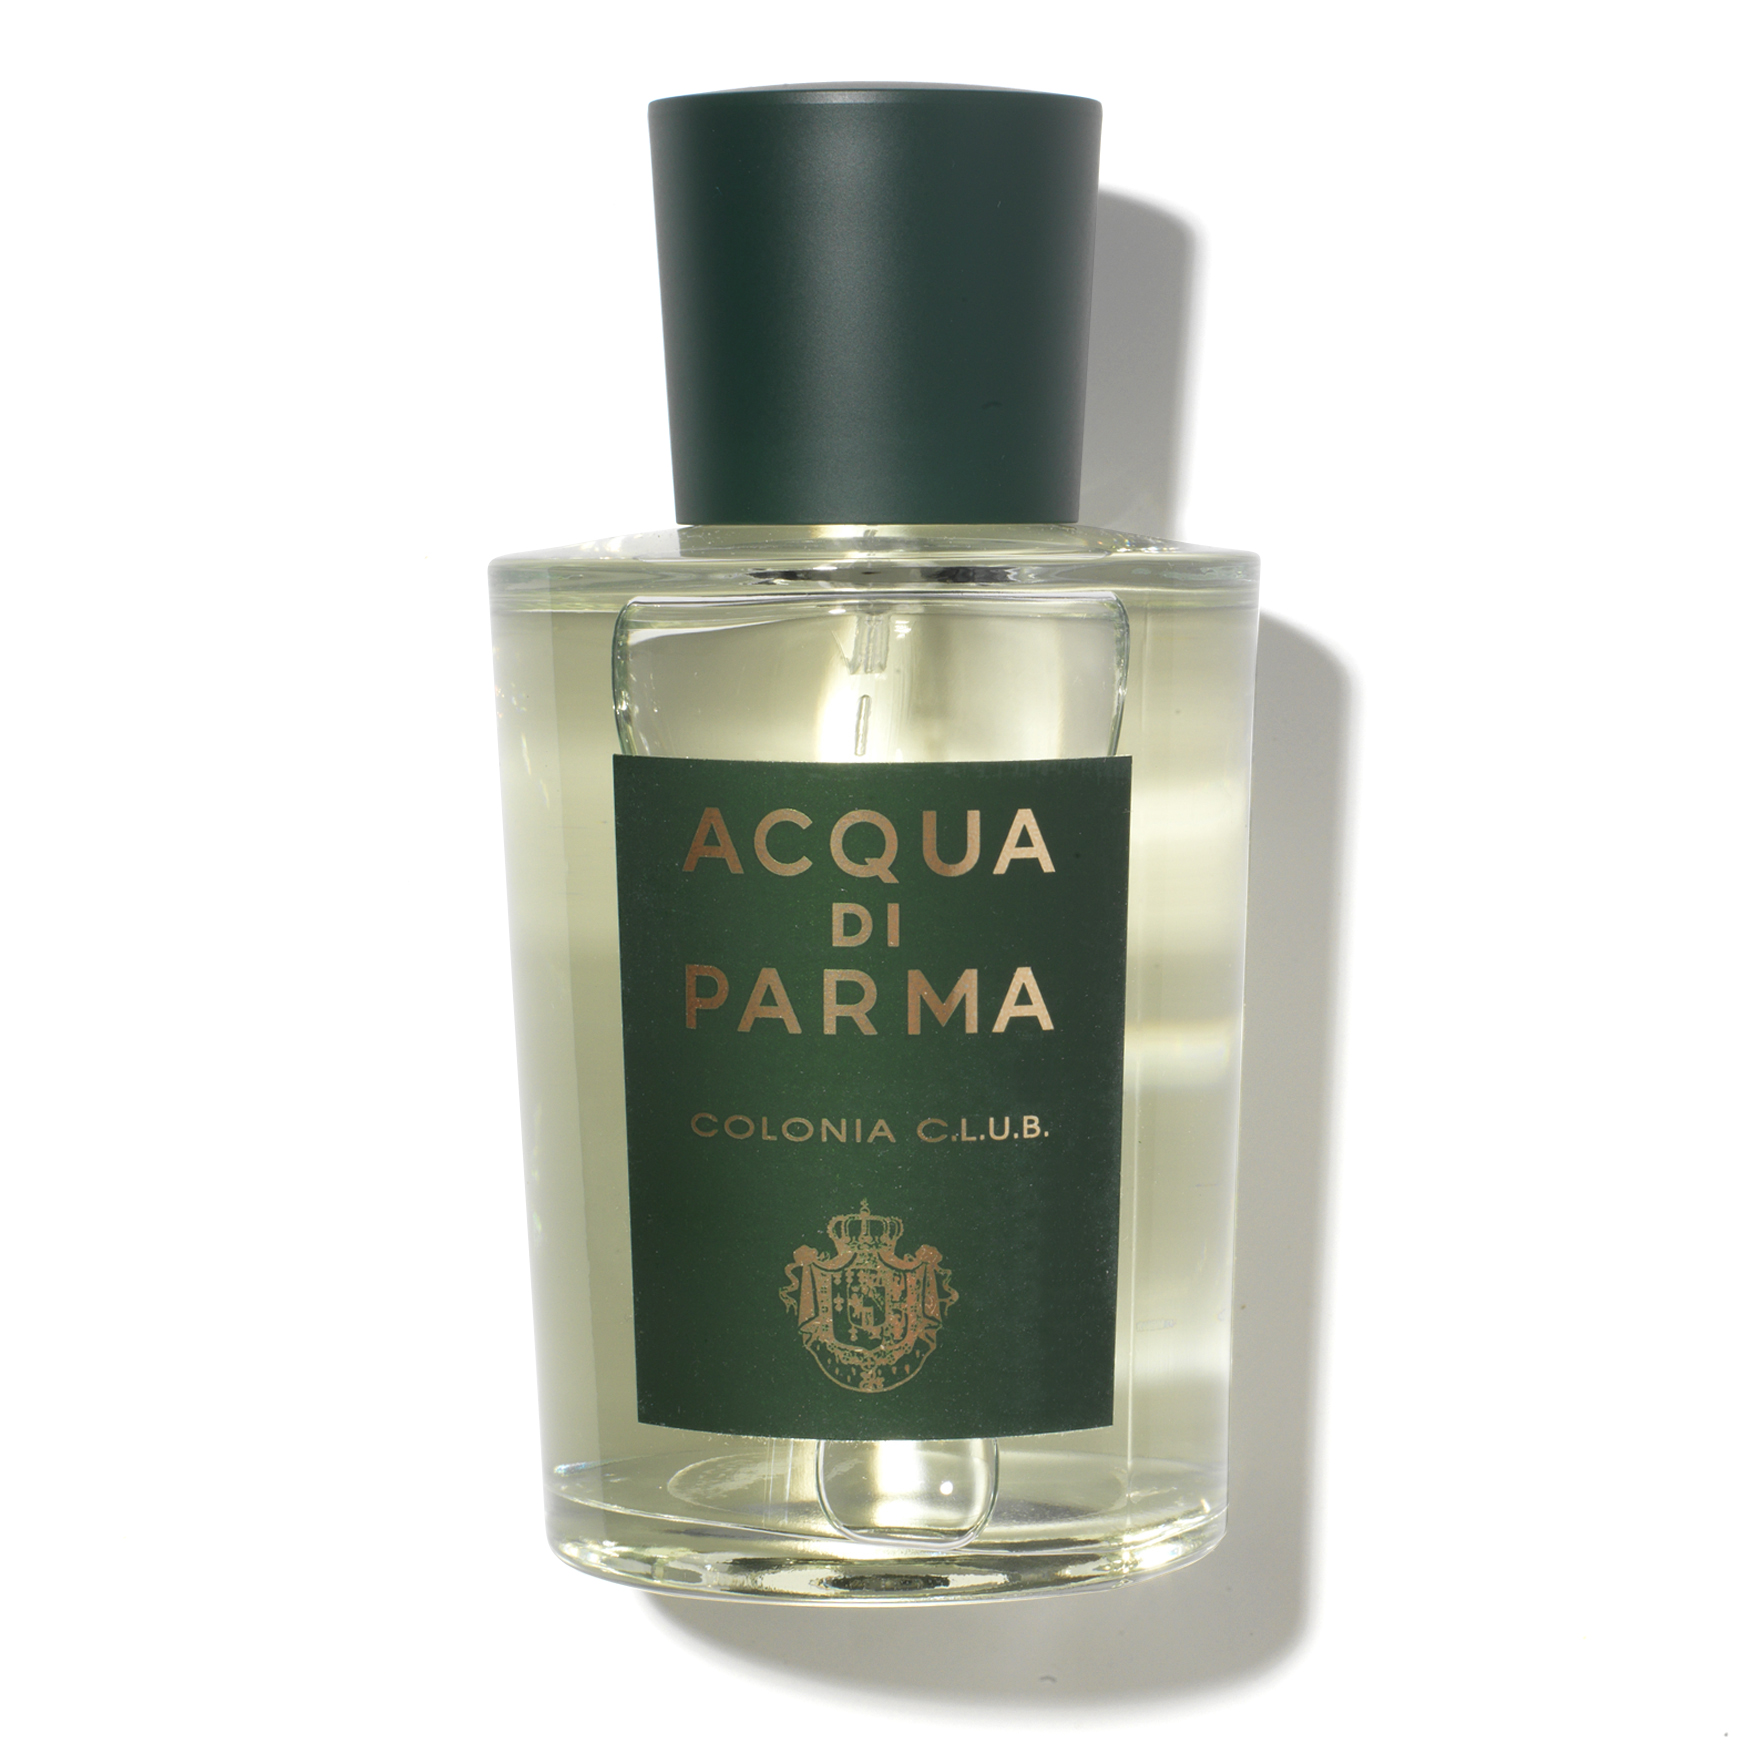 The Best Acqua Di Parma Fragrance For You